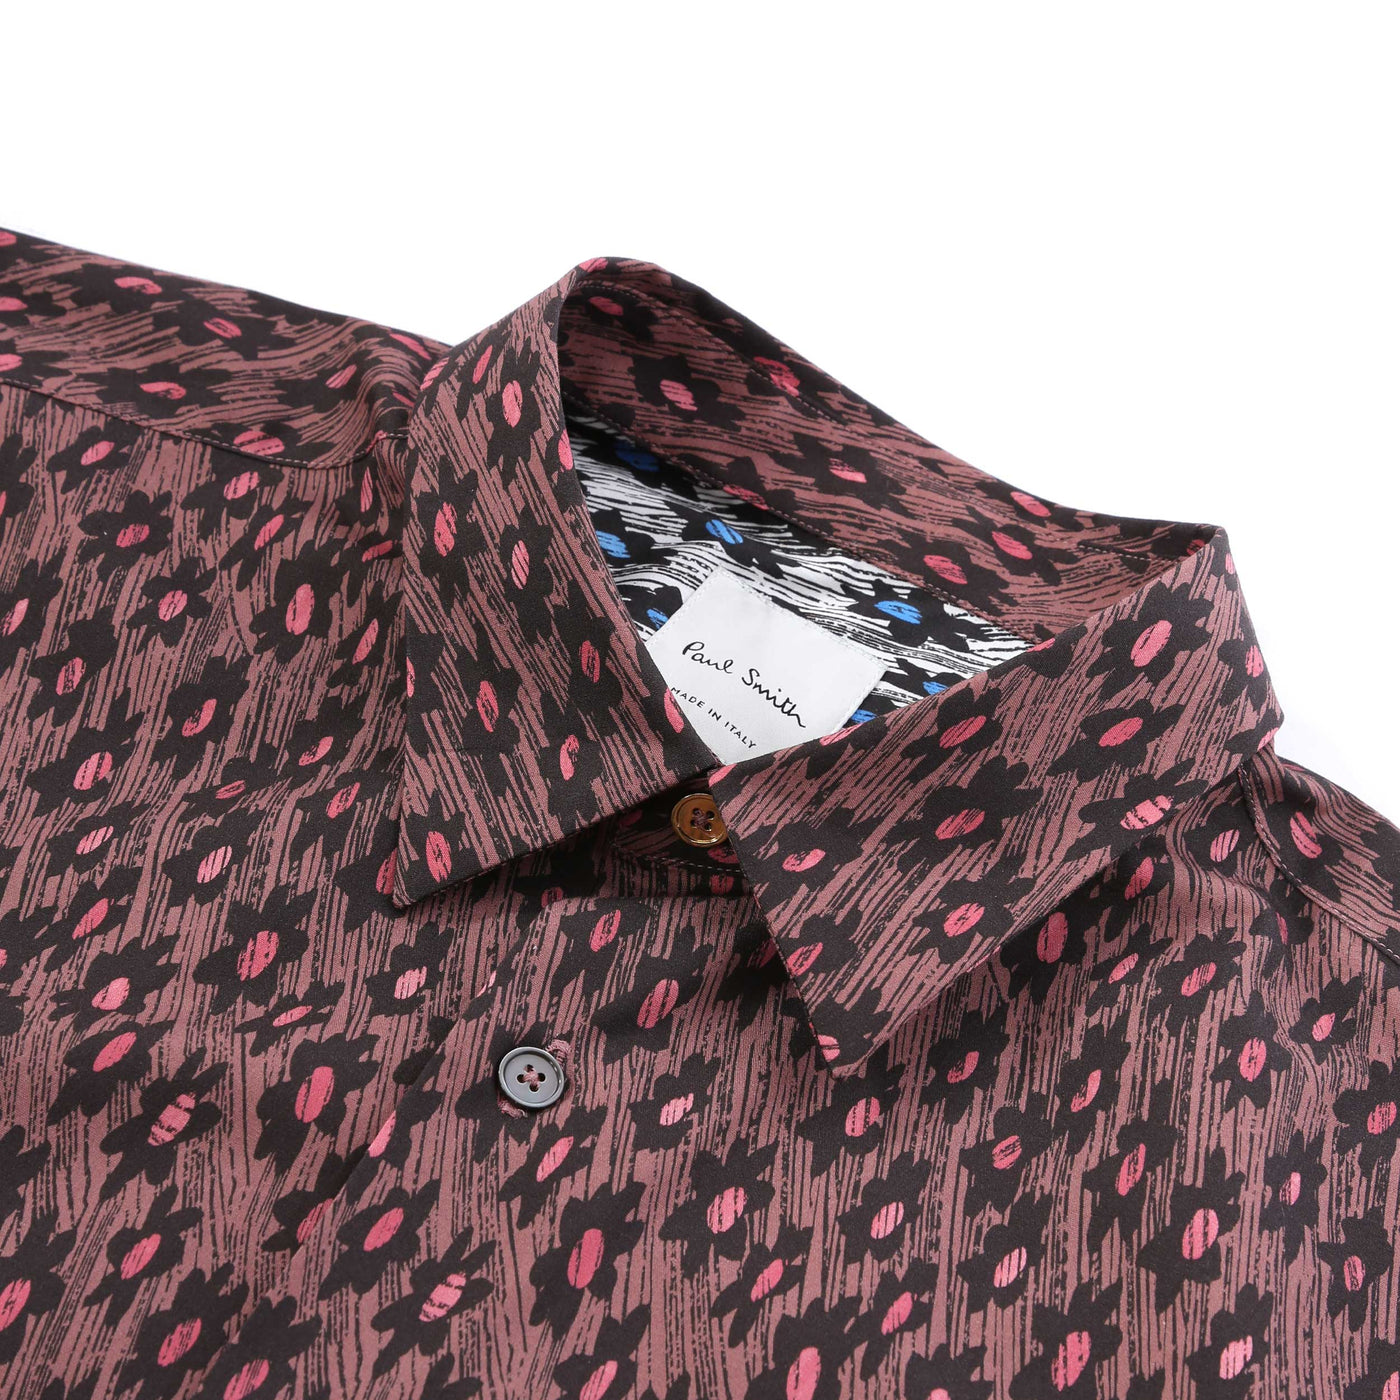 Paul Smith Flower Print Shirt in Mauve Collar